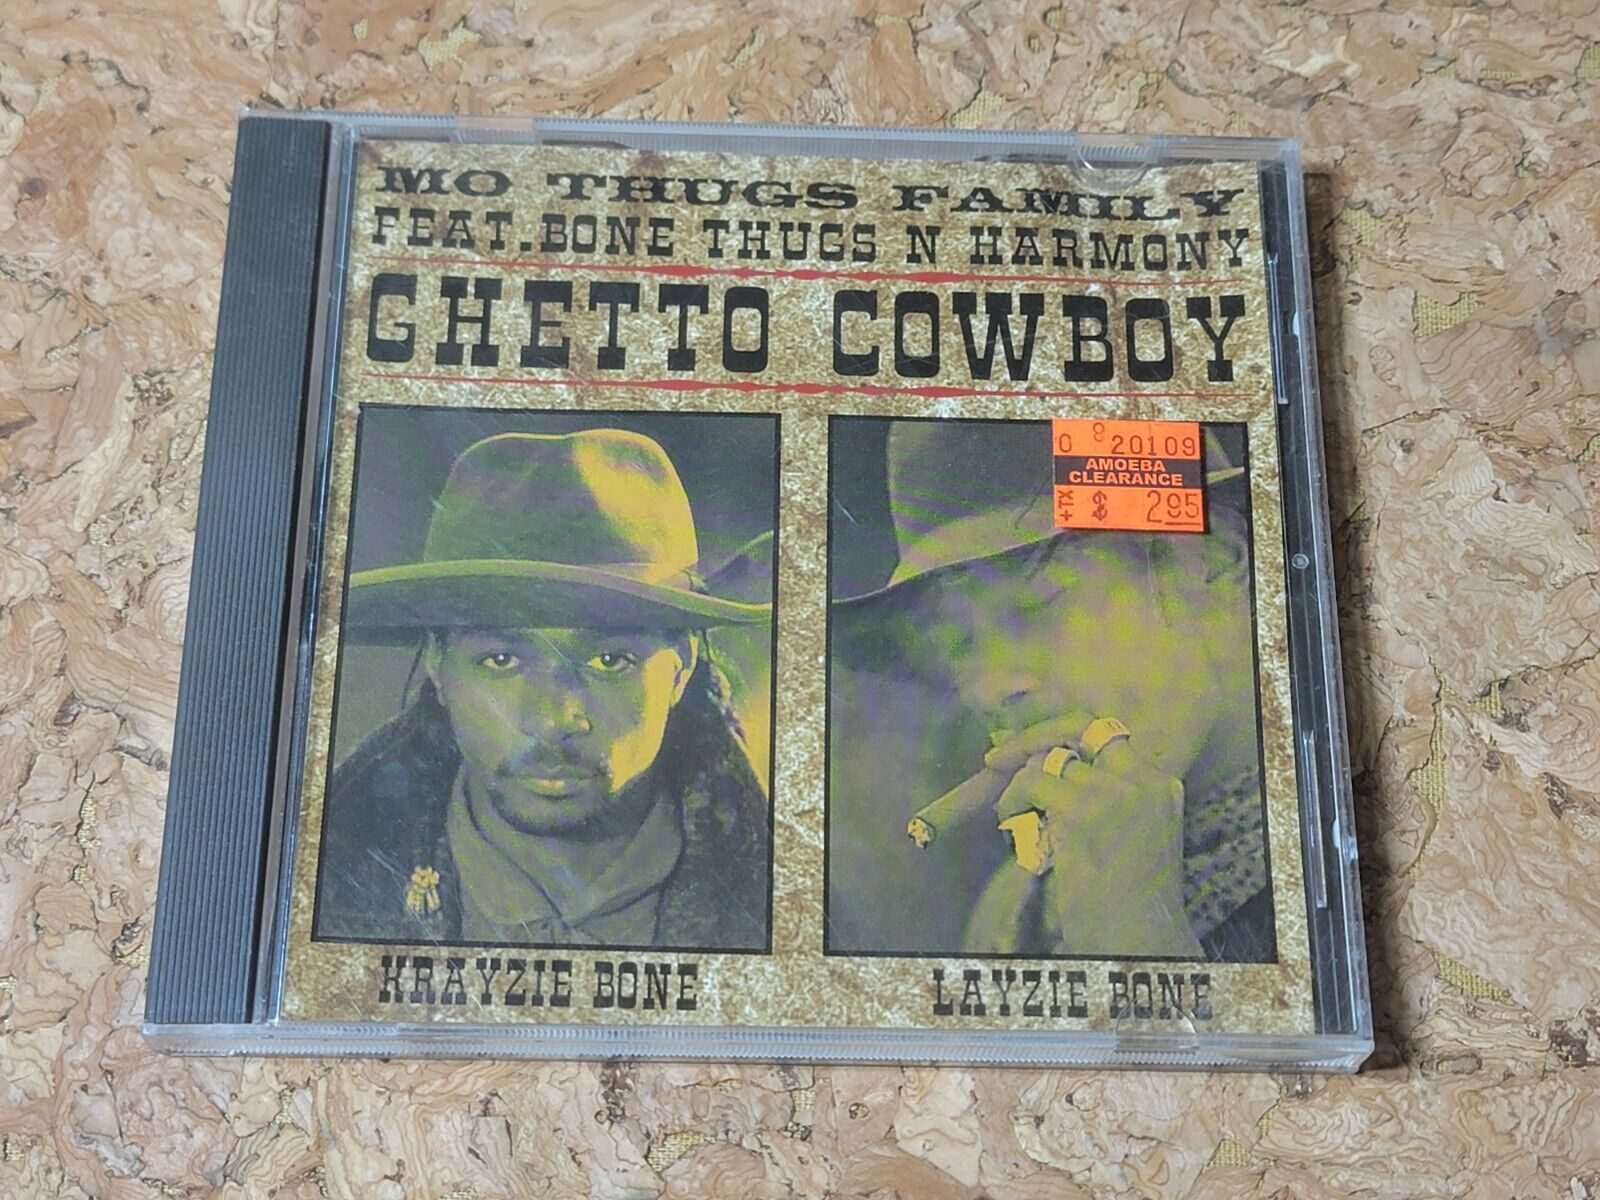 Mo Thugs Family Ghetto Cowboy CD Feat Bone Thugs N Harmony